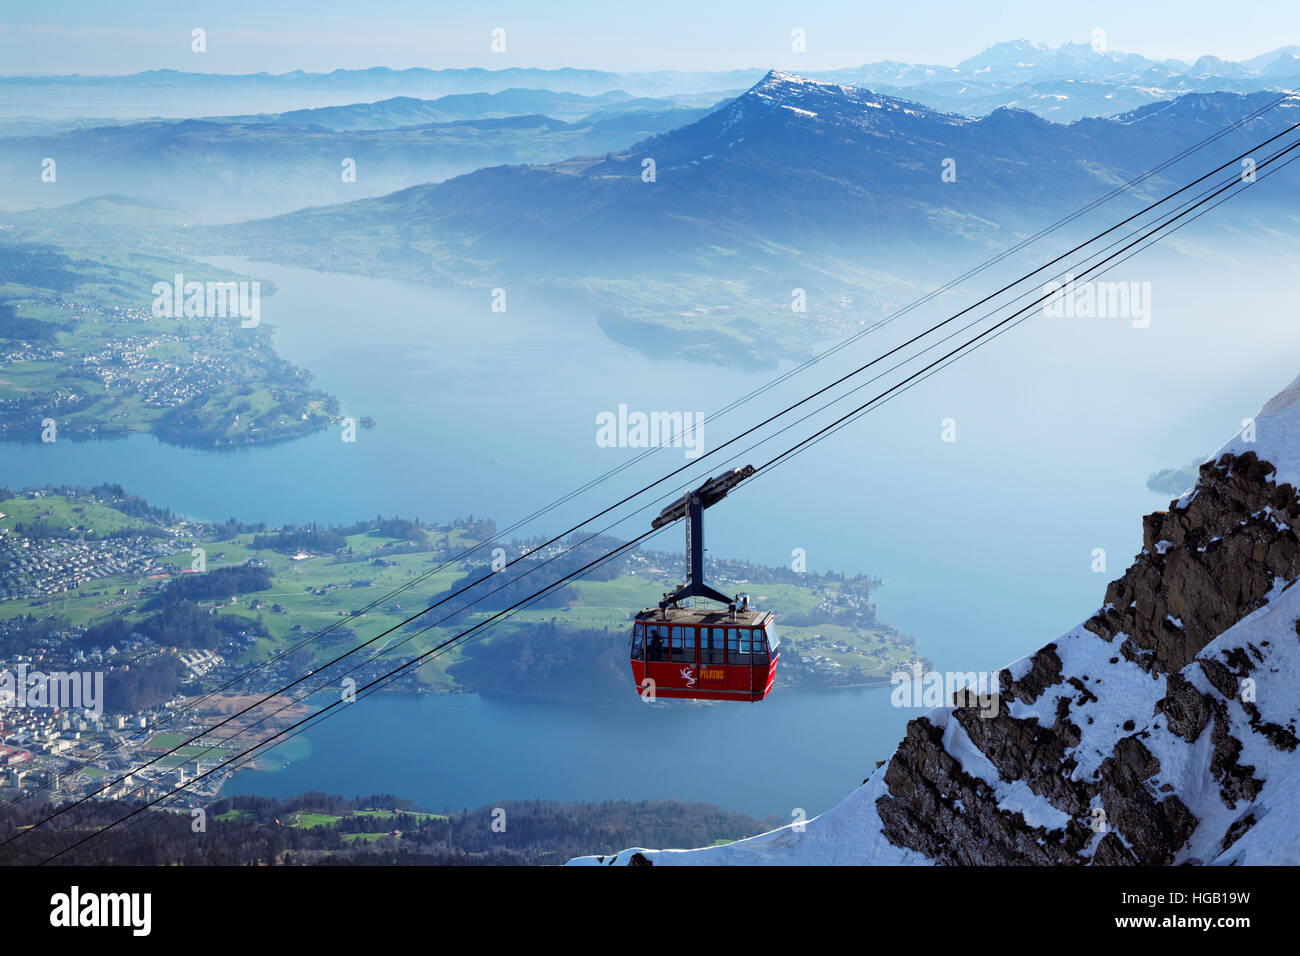 Gondola lift hanging from cables high above Lake Lucerne, near summit of Mount Pilatus, Switzerland Stock Photo